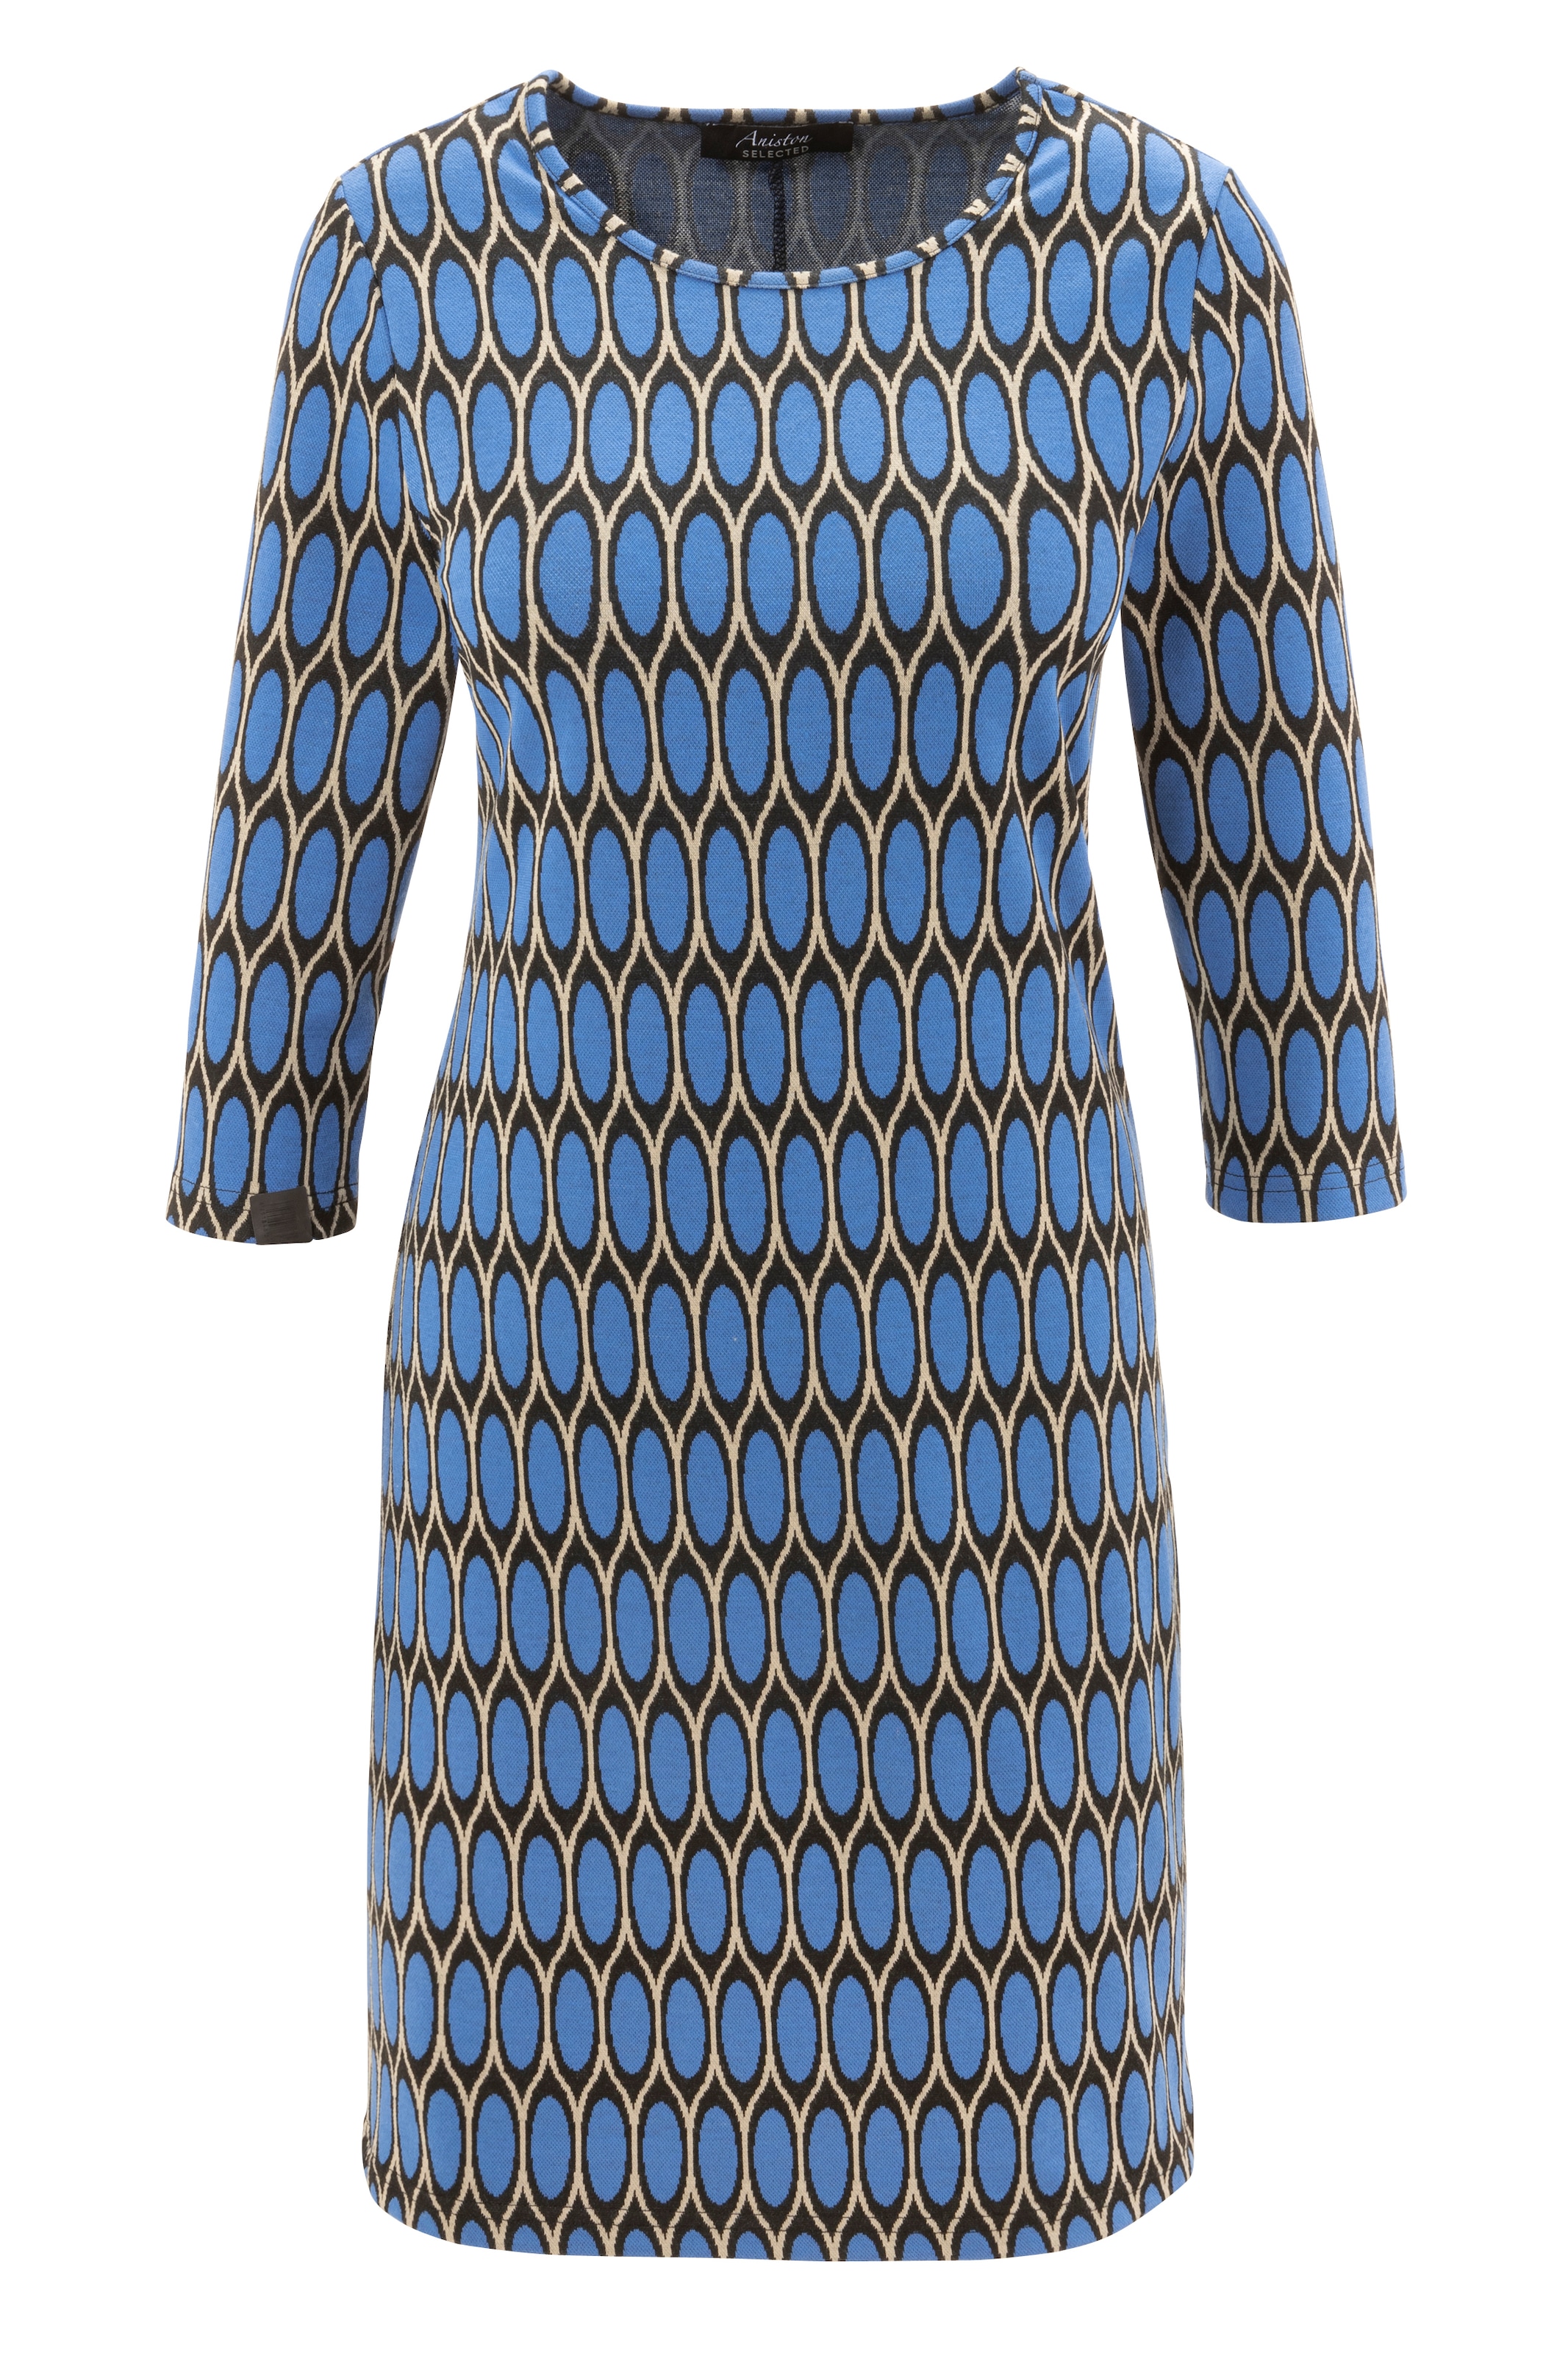 Aniston SELECTED Jerseykleid, aus Jacquard mit Retro-Muster bei ♕